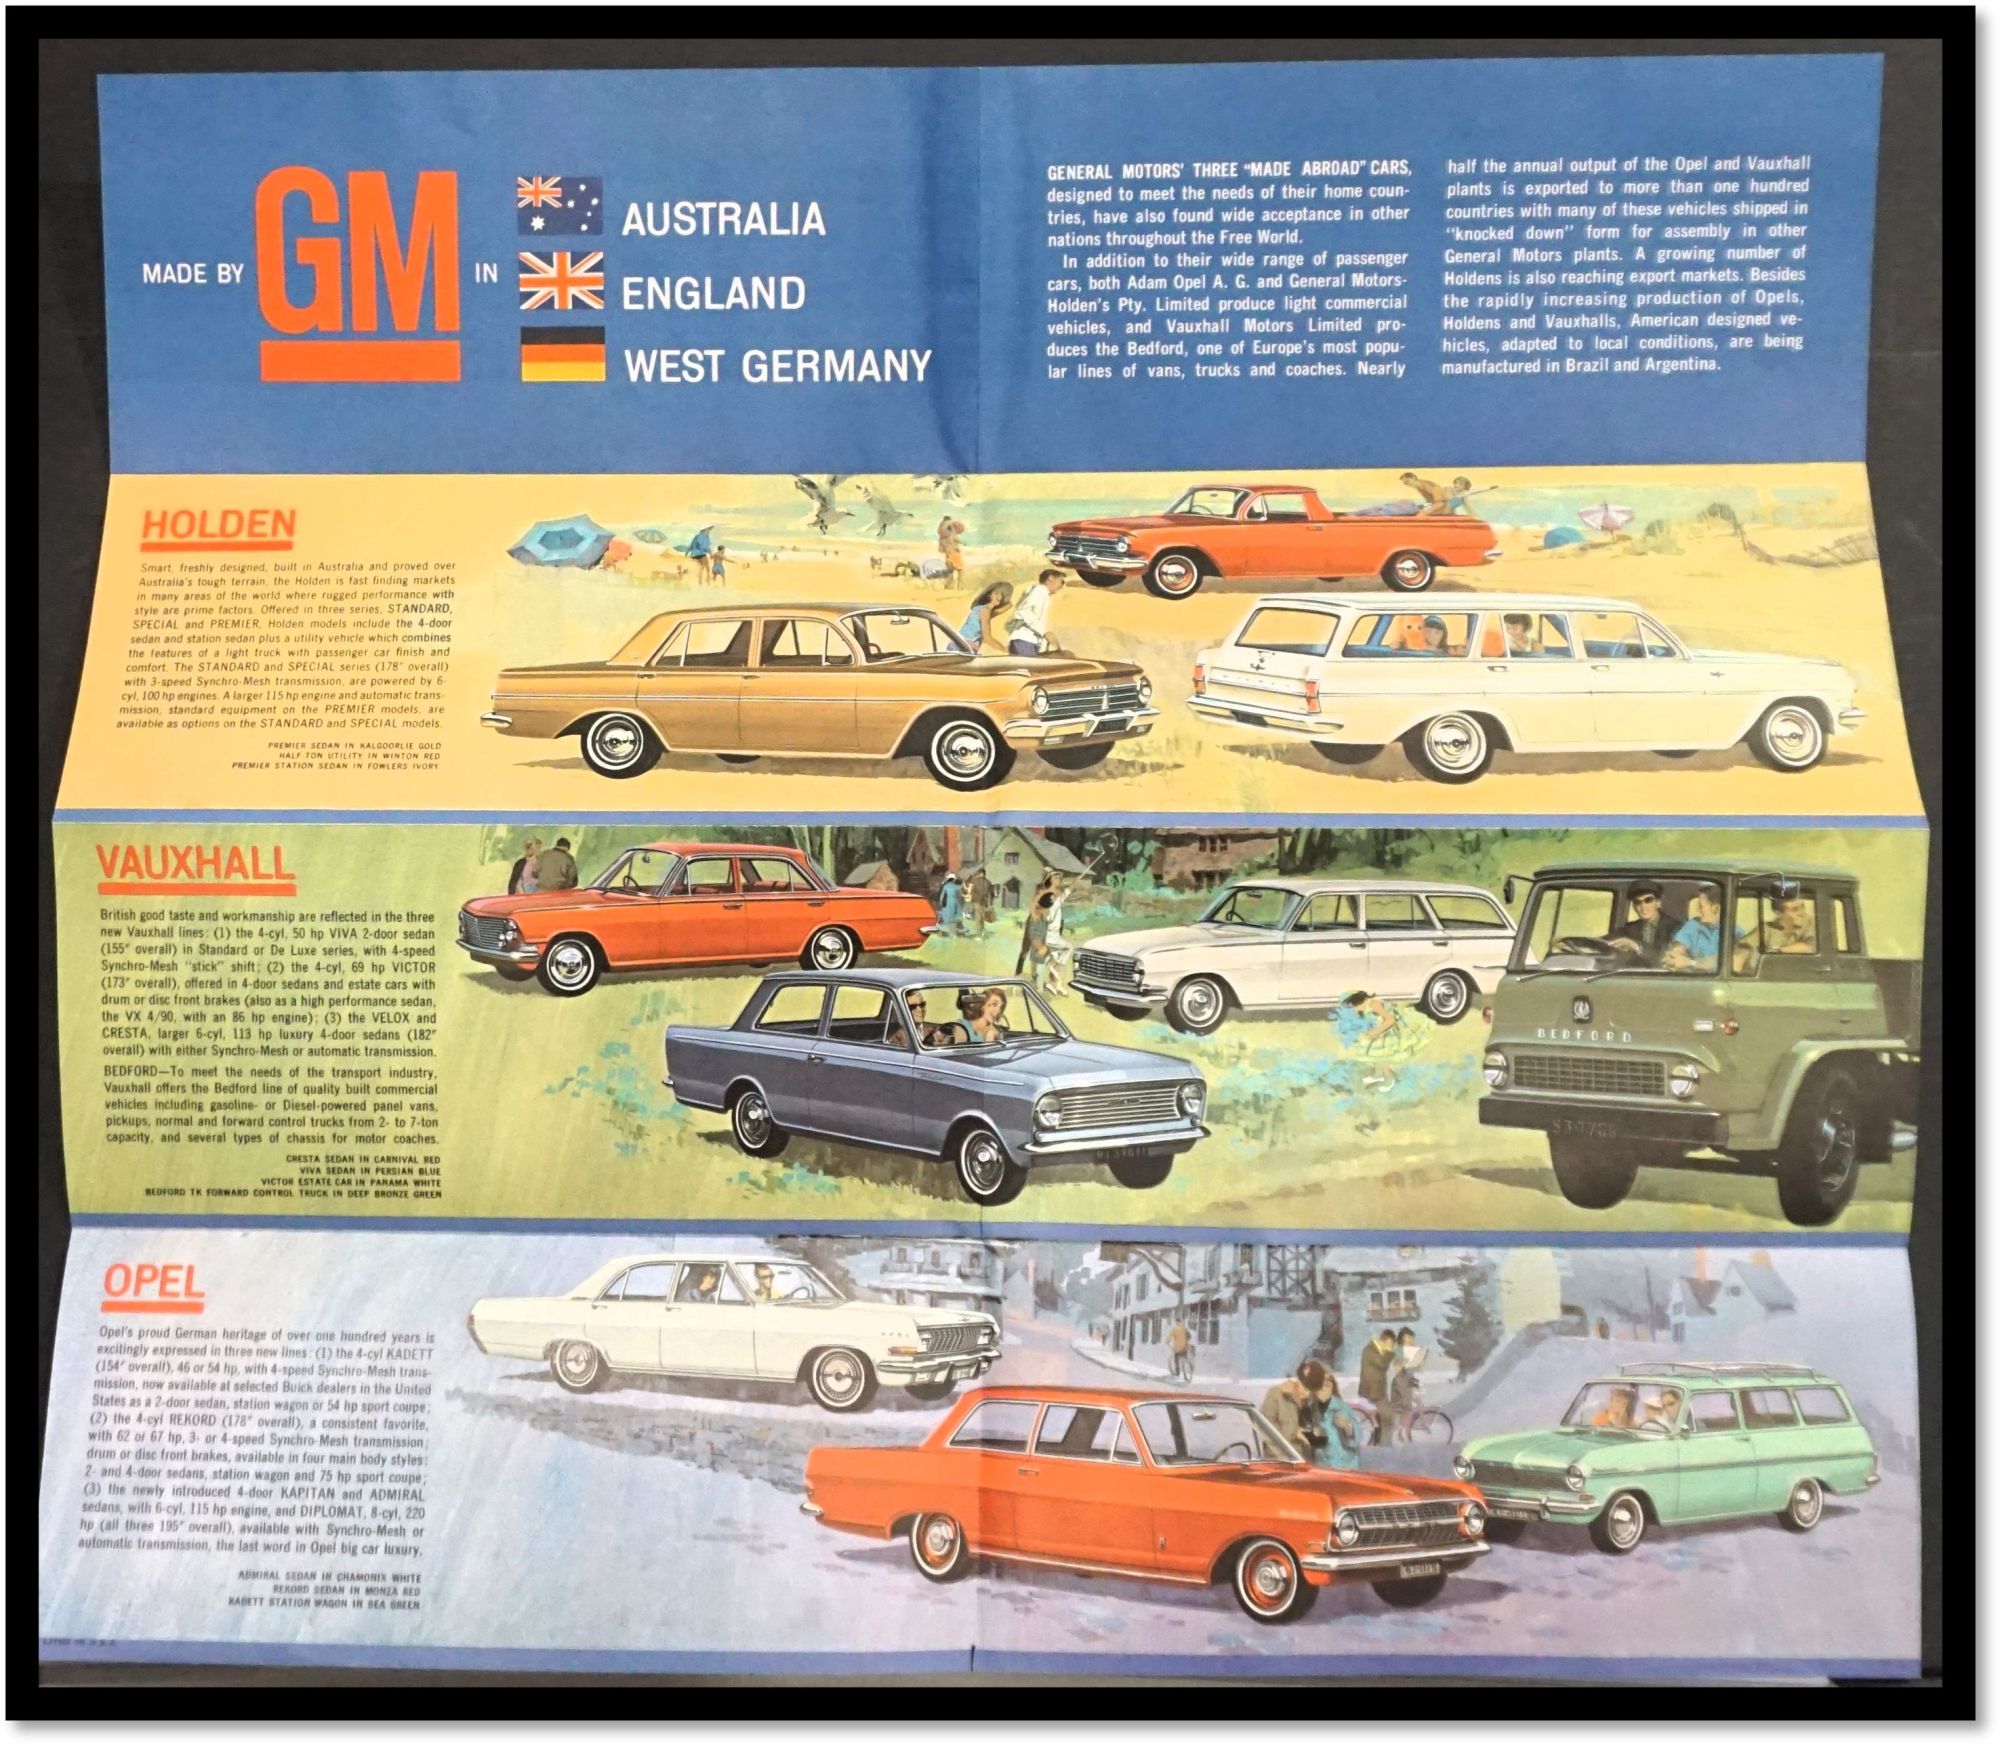 G M General Motors Overseas Operations Promotional Brochure 1964 New York  World's Fair